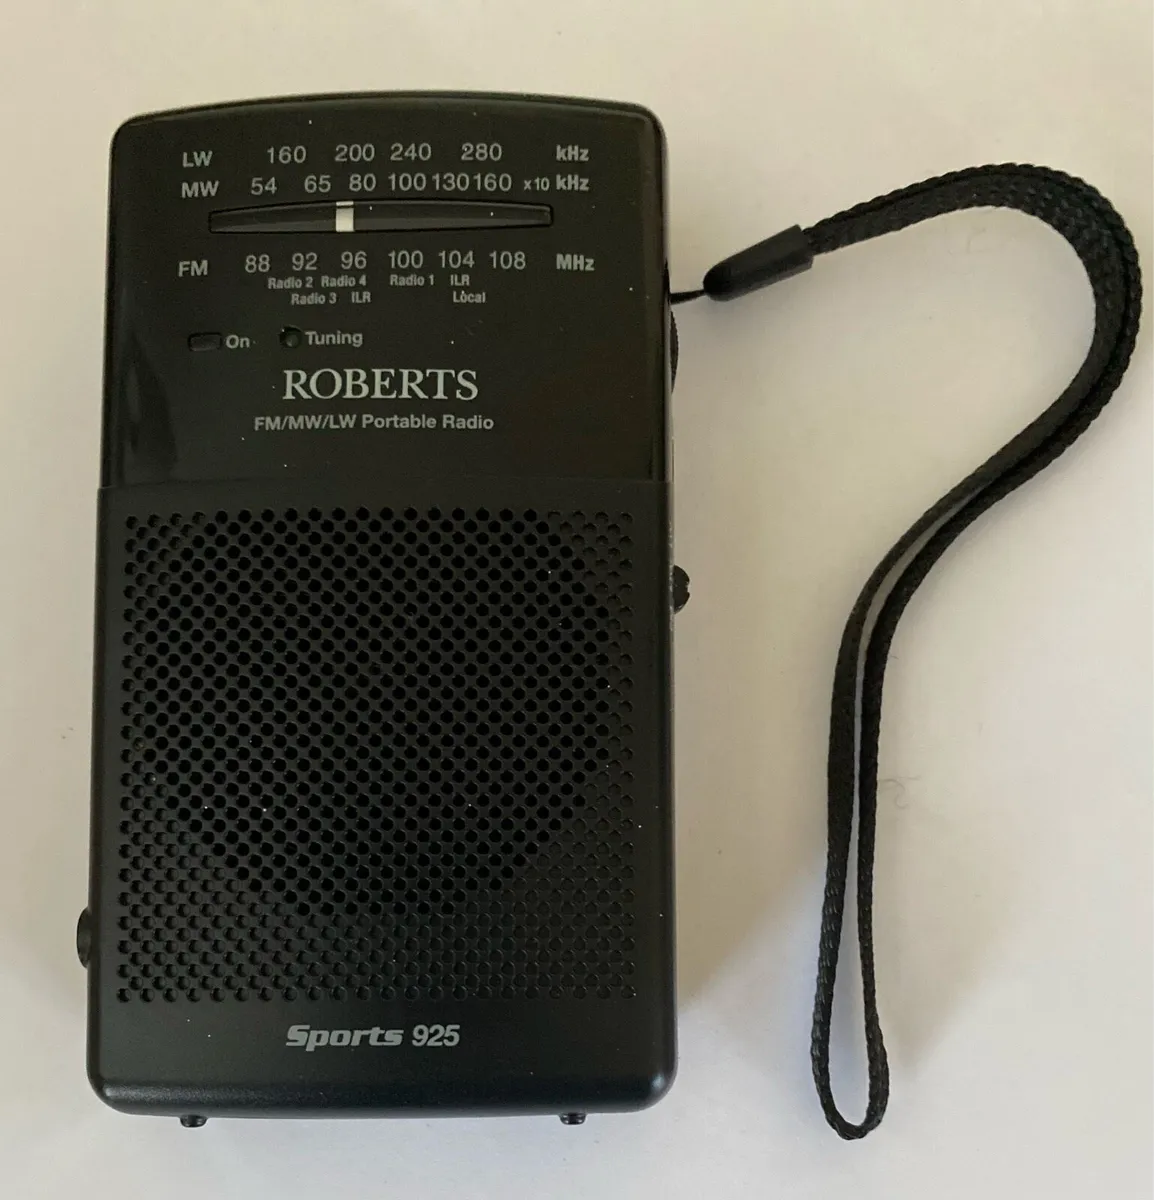 Robert’s pocket radio